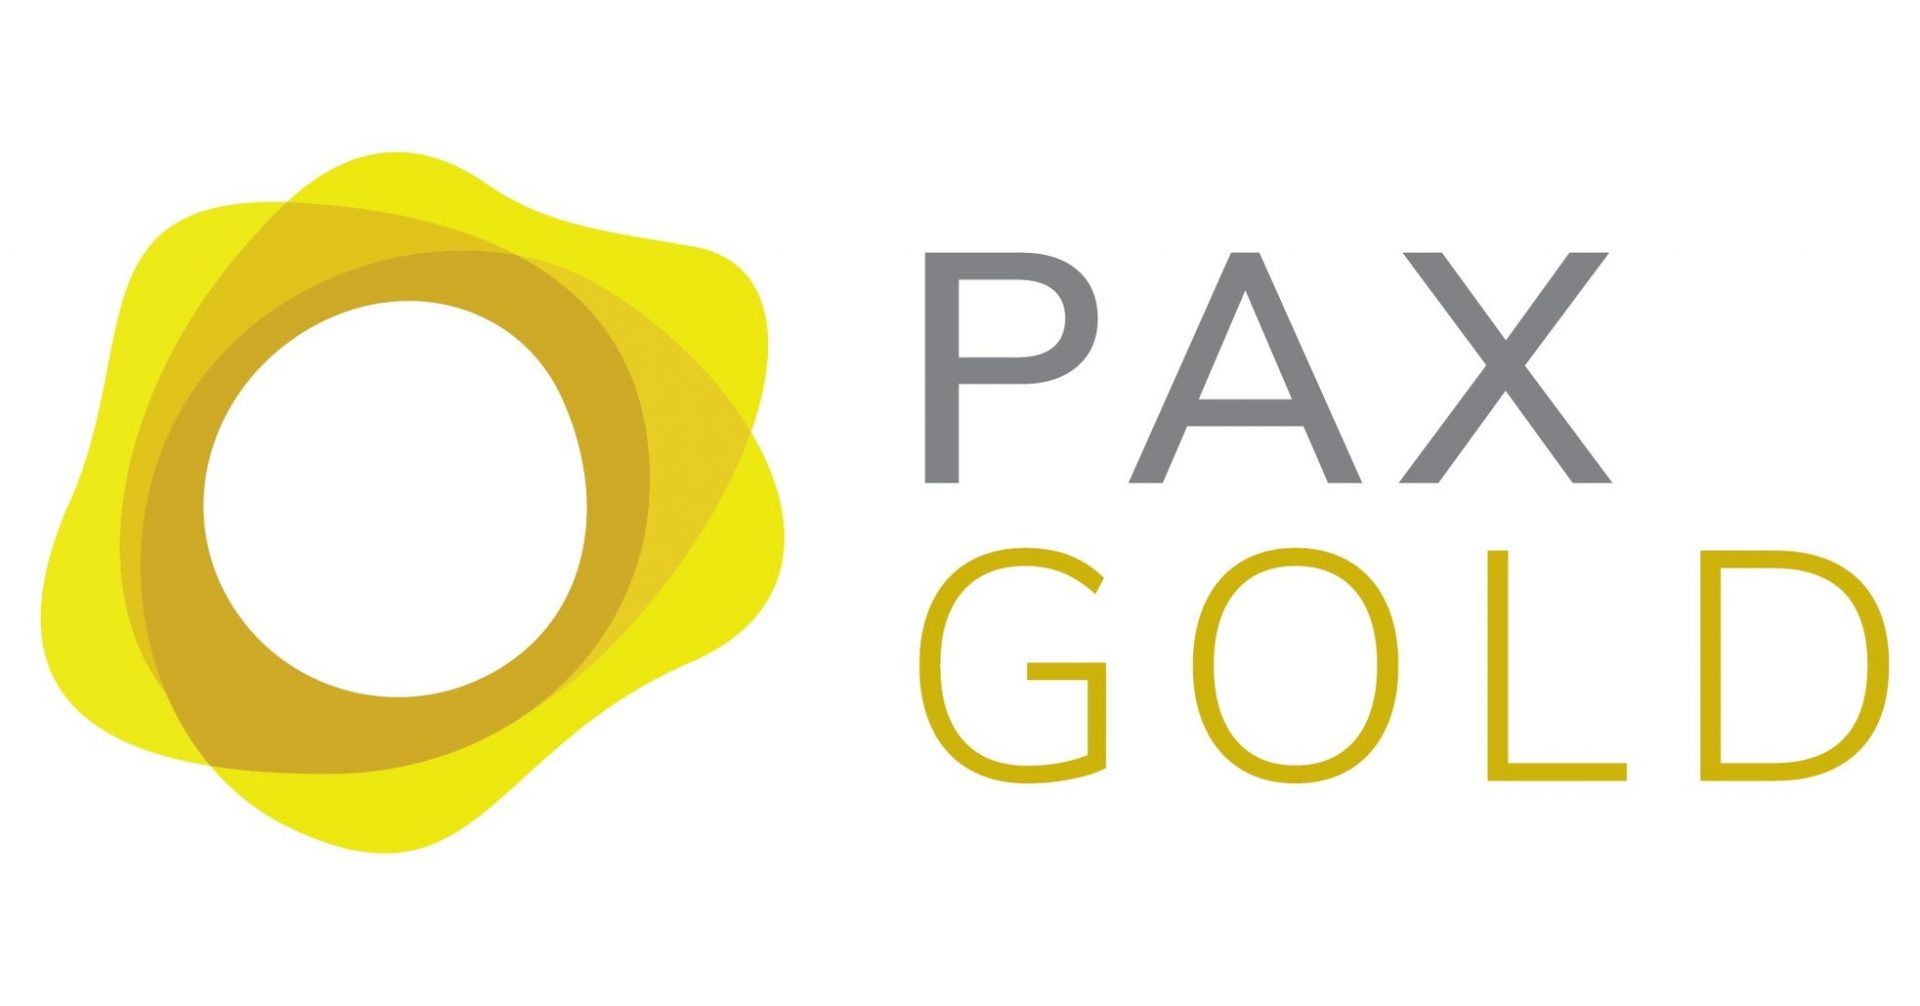 پکسوس گلد
Paxos Gold
paxg
استیبل کوین پکس